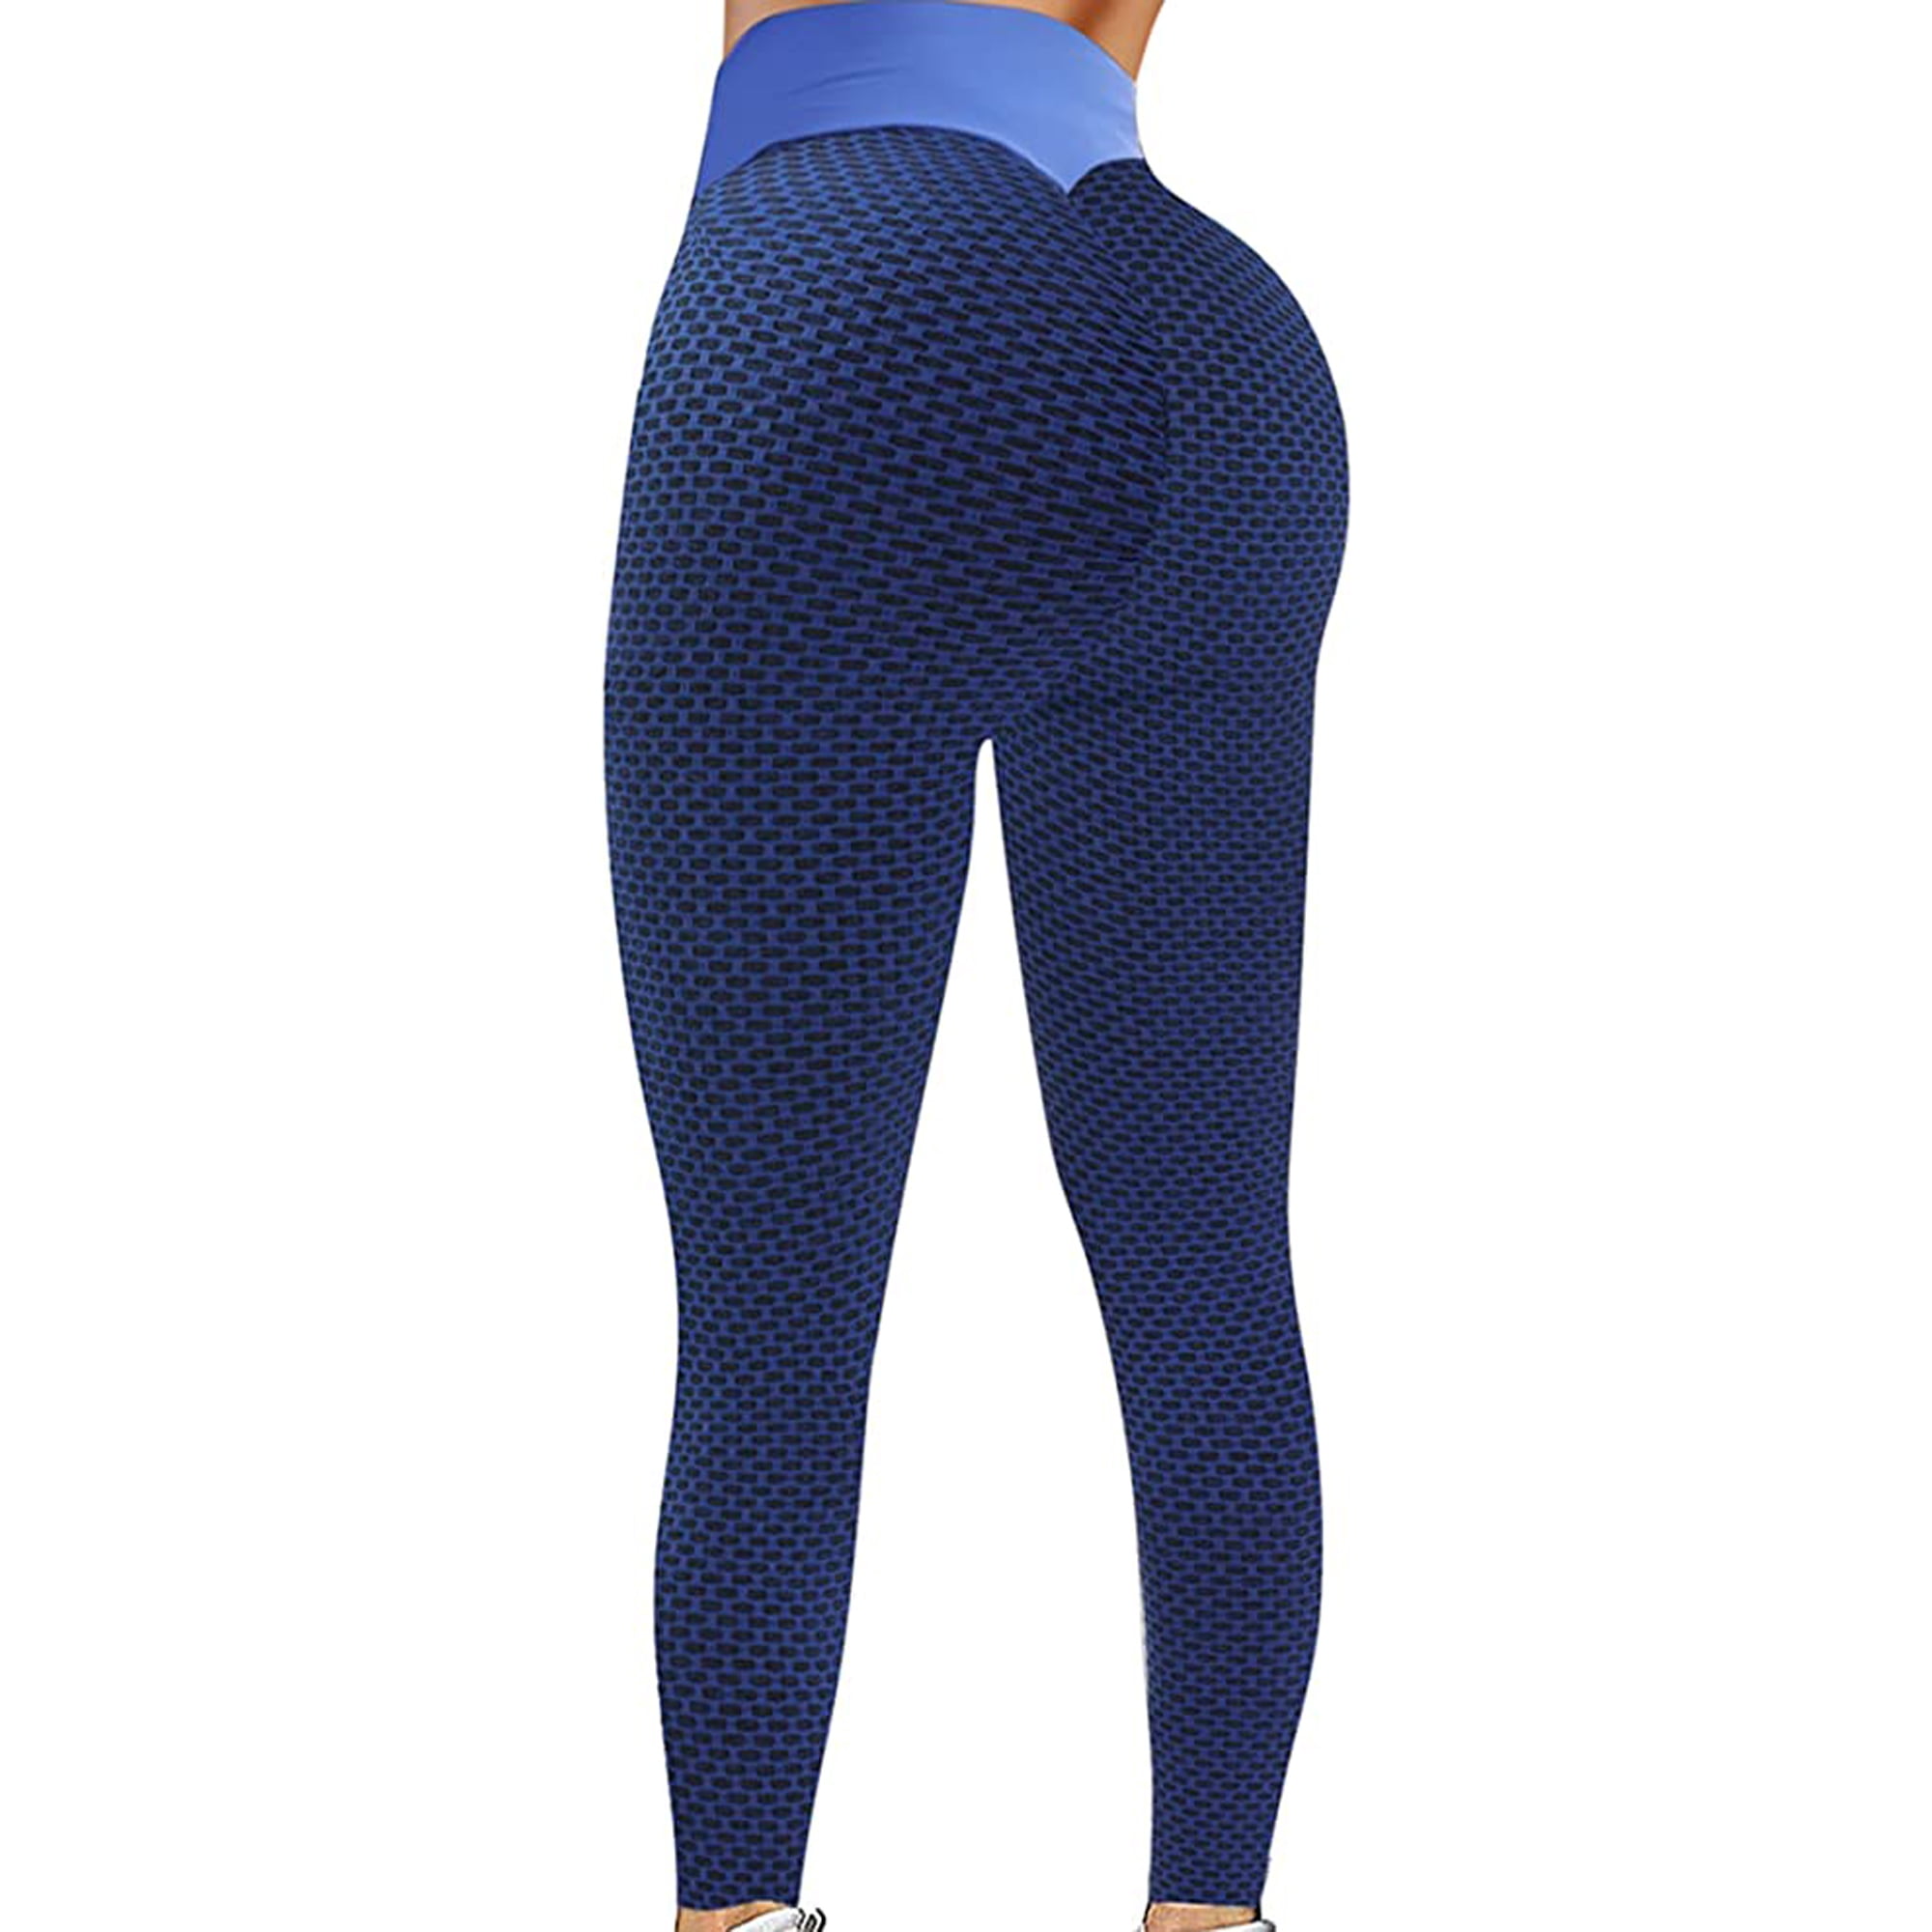 VENUZOR Women's Yoga Pants High Waist Tummy Control Leggings Anti ...